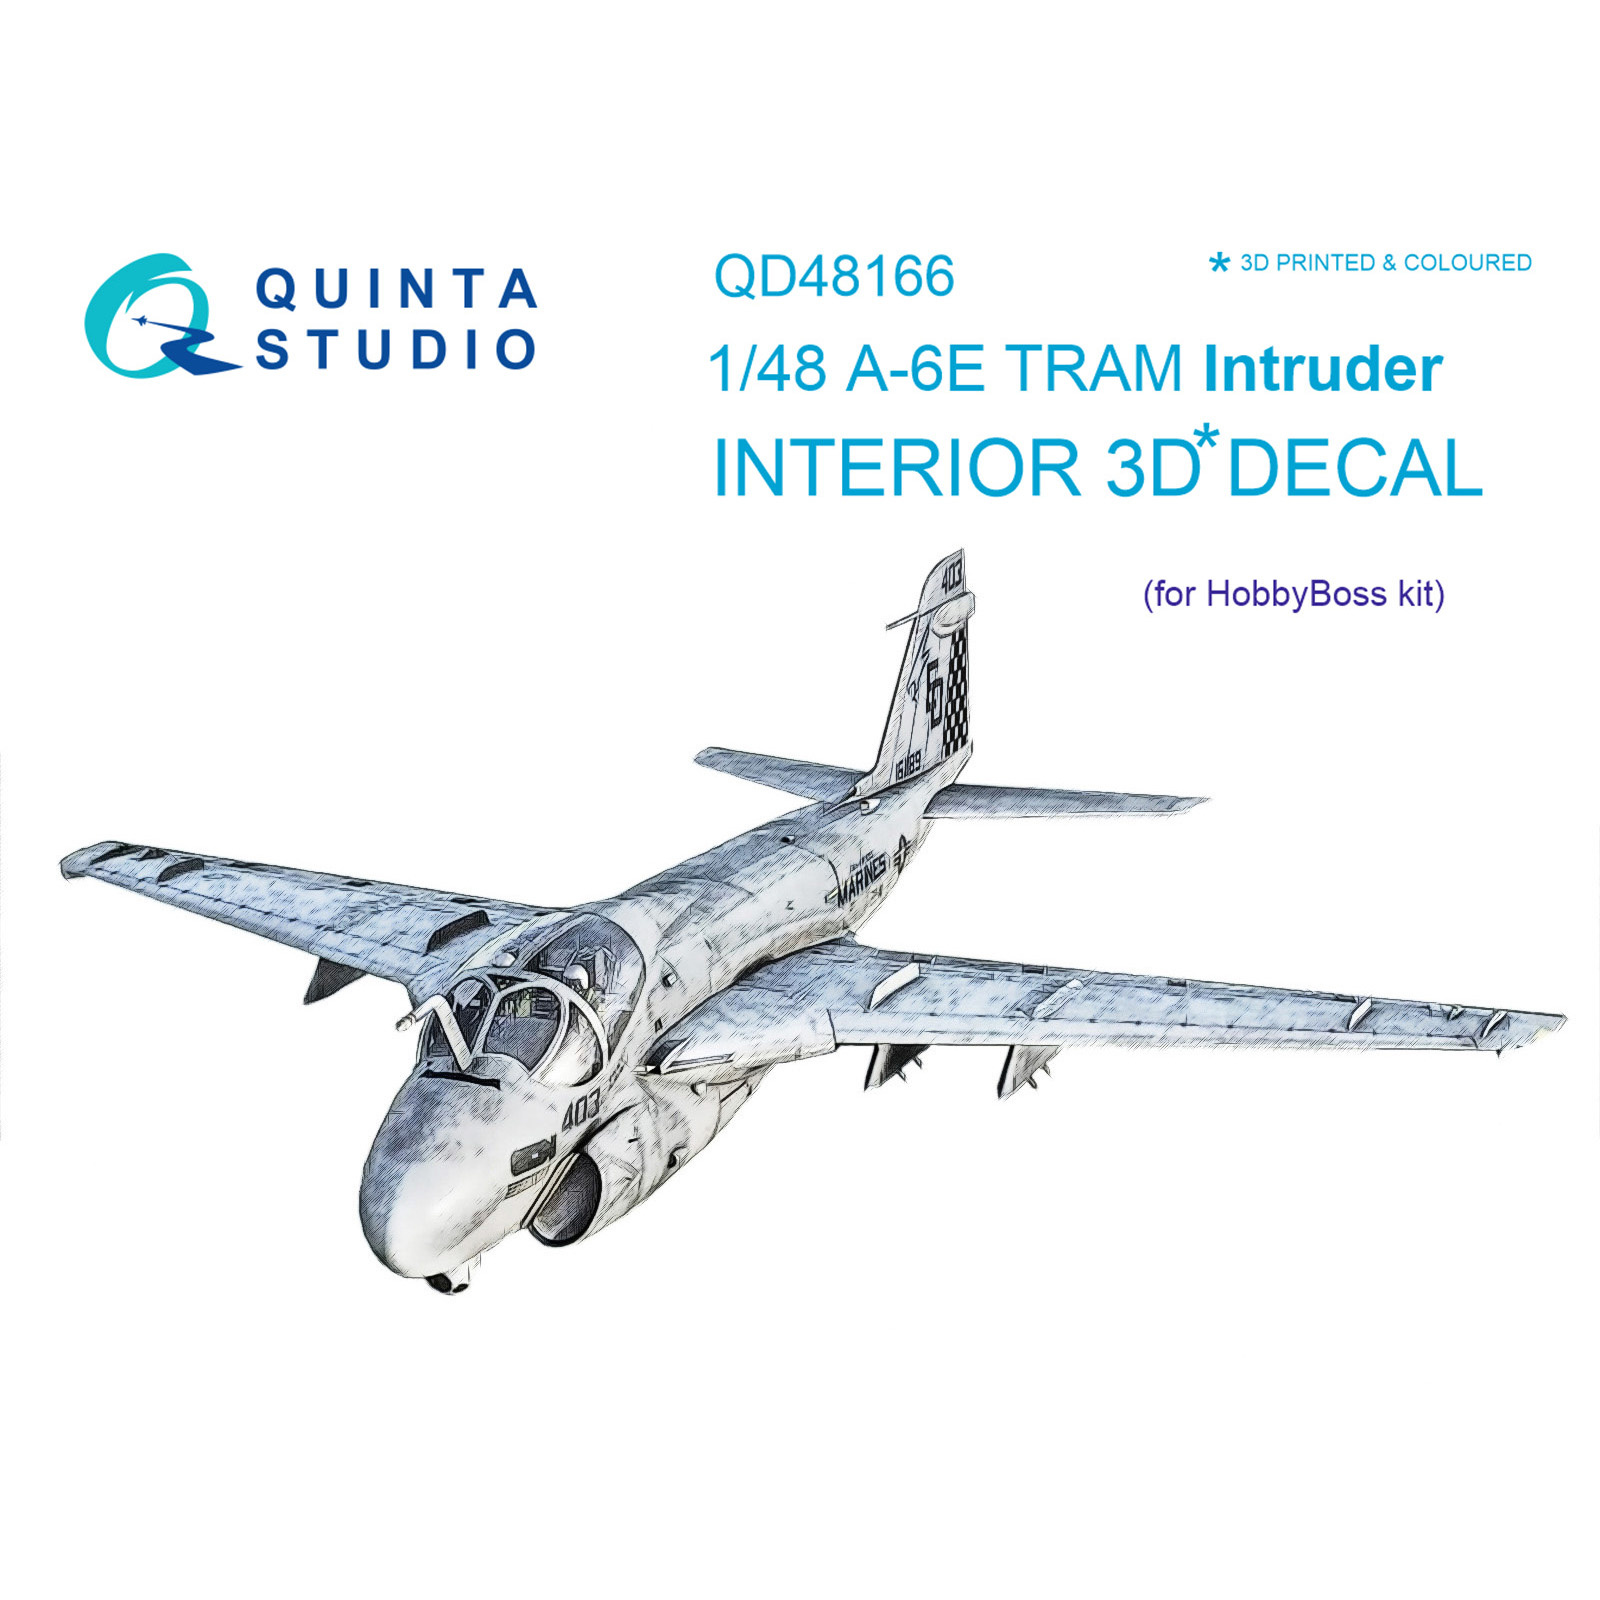 QD48166 Quinta Studio 1/48 3D Cabin Interior Decal A-6E TRAM Intruder (for HobbyBoss model)